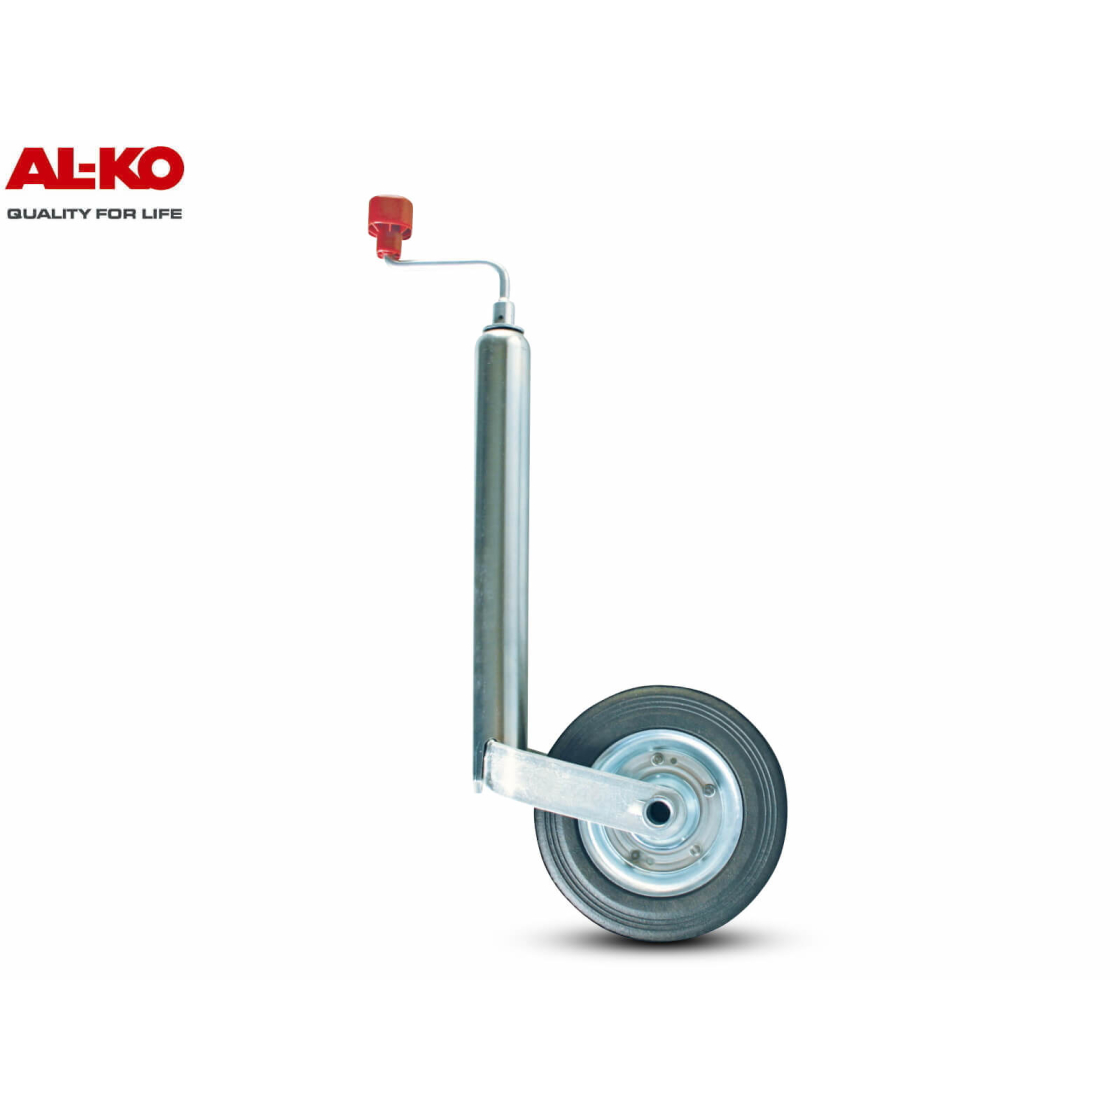 AL-KO AL-KO Anhänger Stützrad mit Stahlfelge Compact 150kg ALKO Stützrad Trailer 